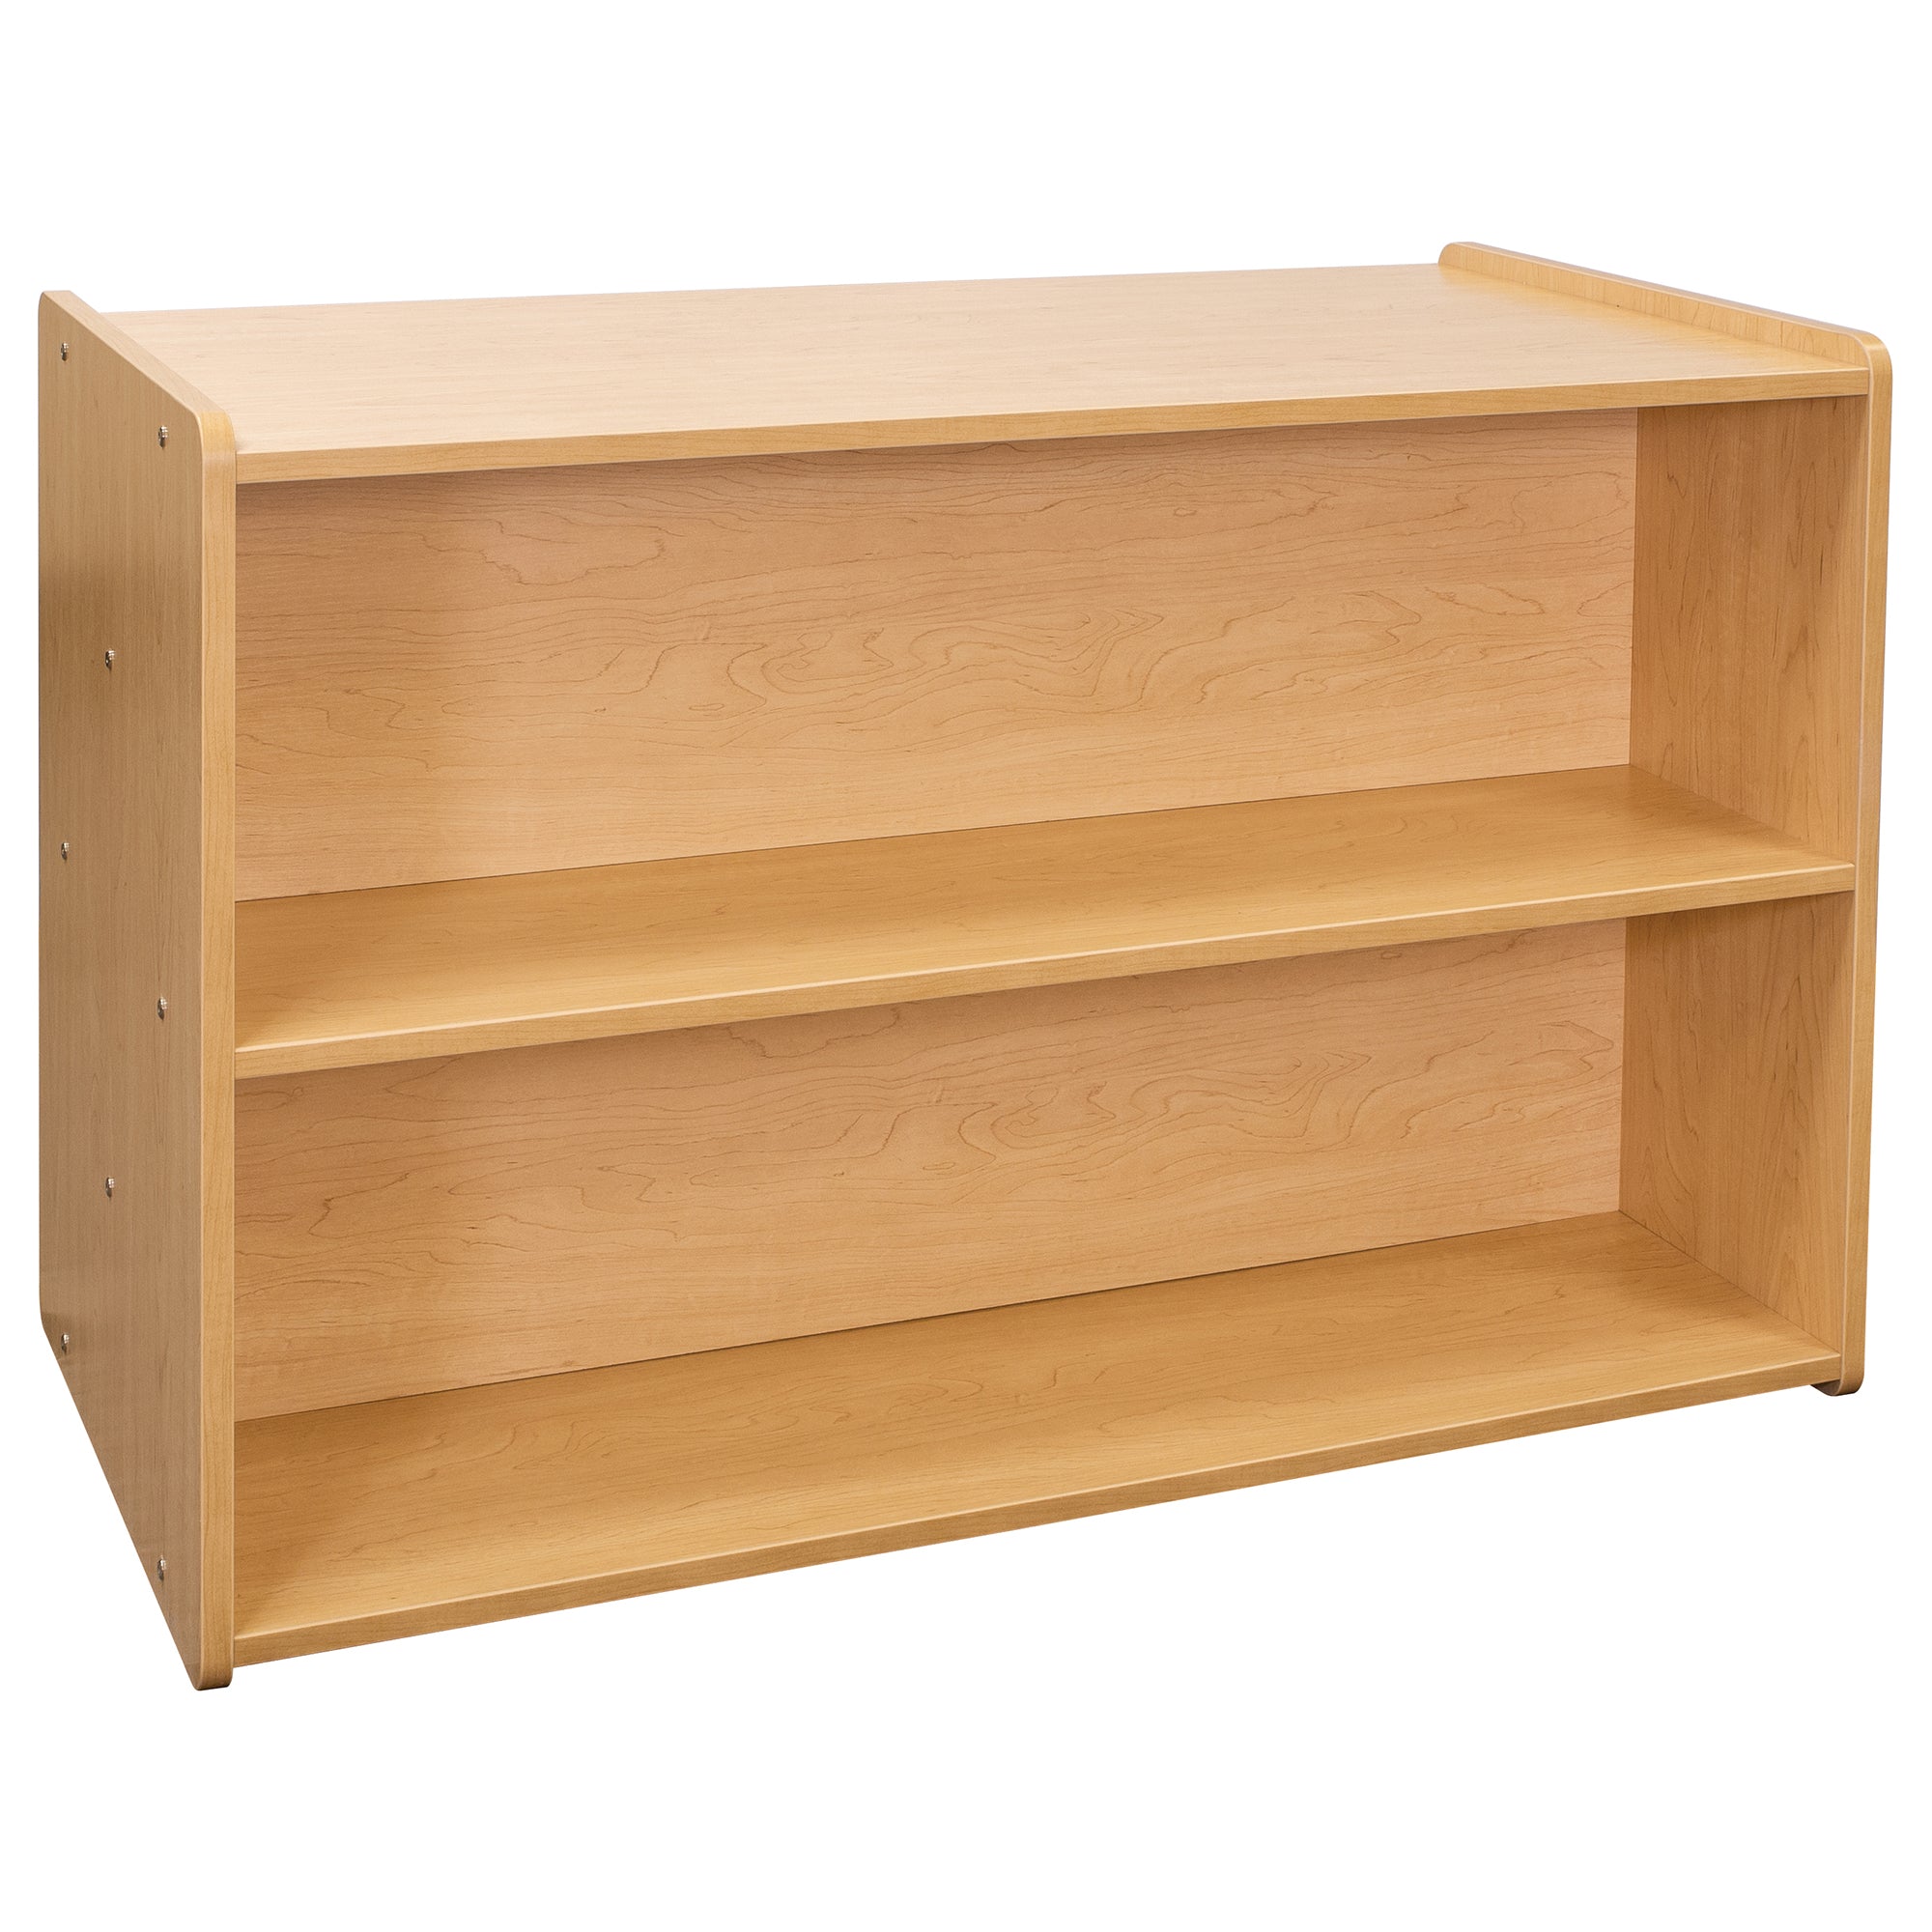 Preschool Shelf Storage- Double Sided 46" Wide